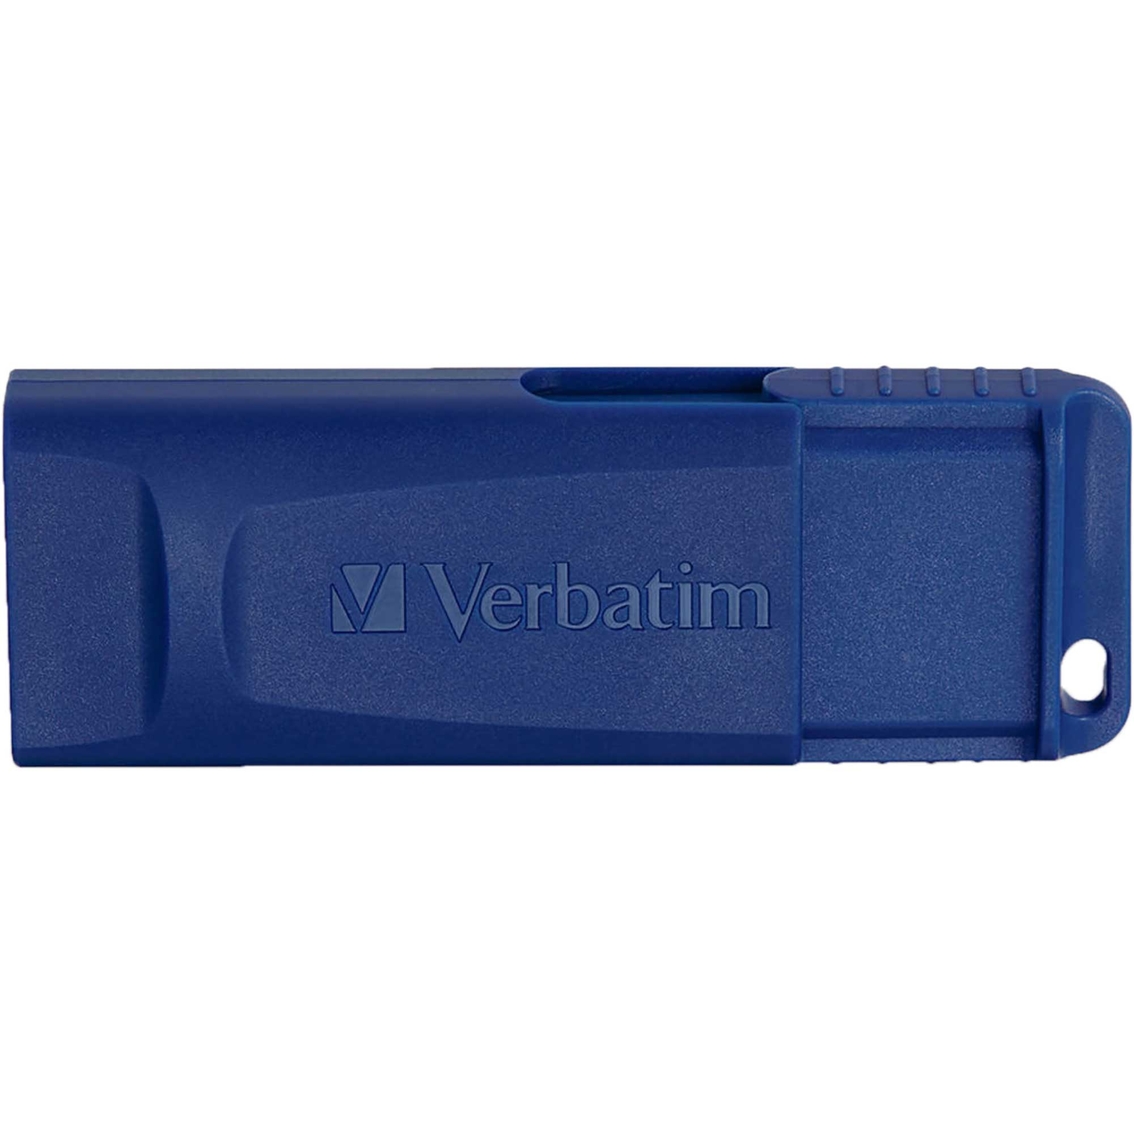 Verbatim 8GB USB Flash Drive 5 pk. - Image 2 of 2